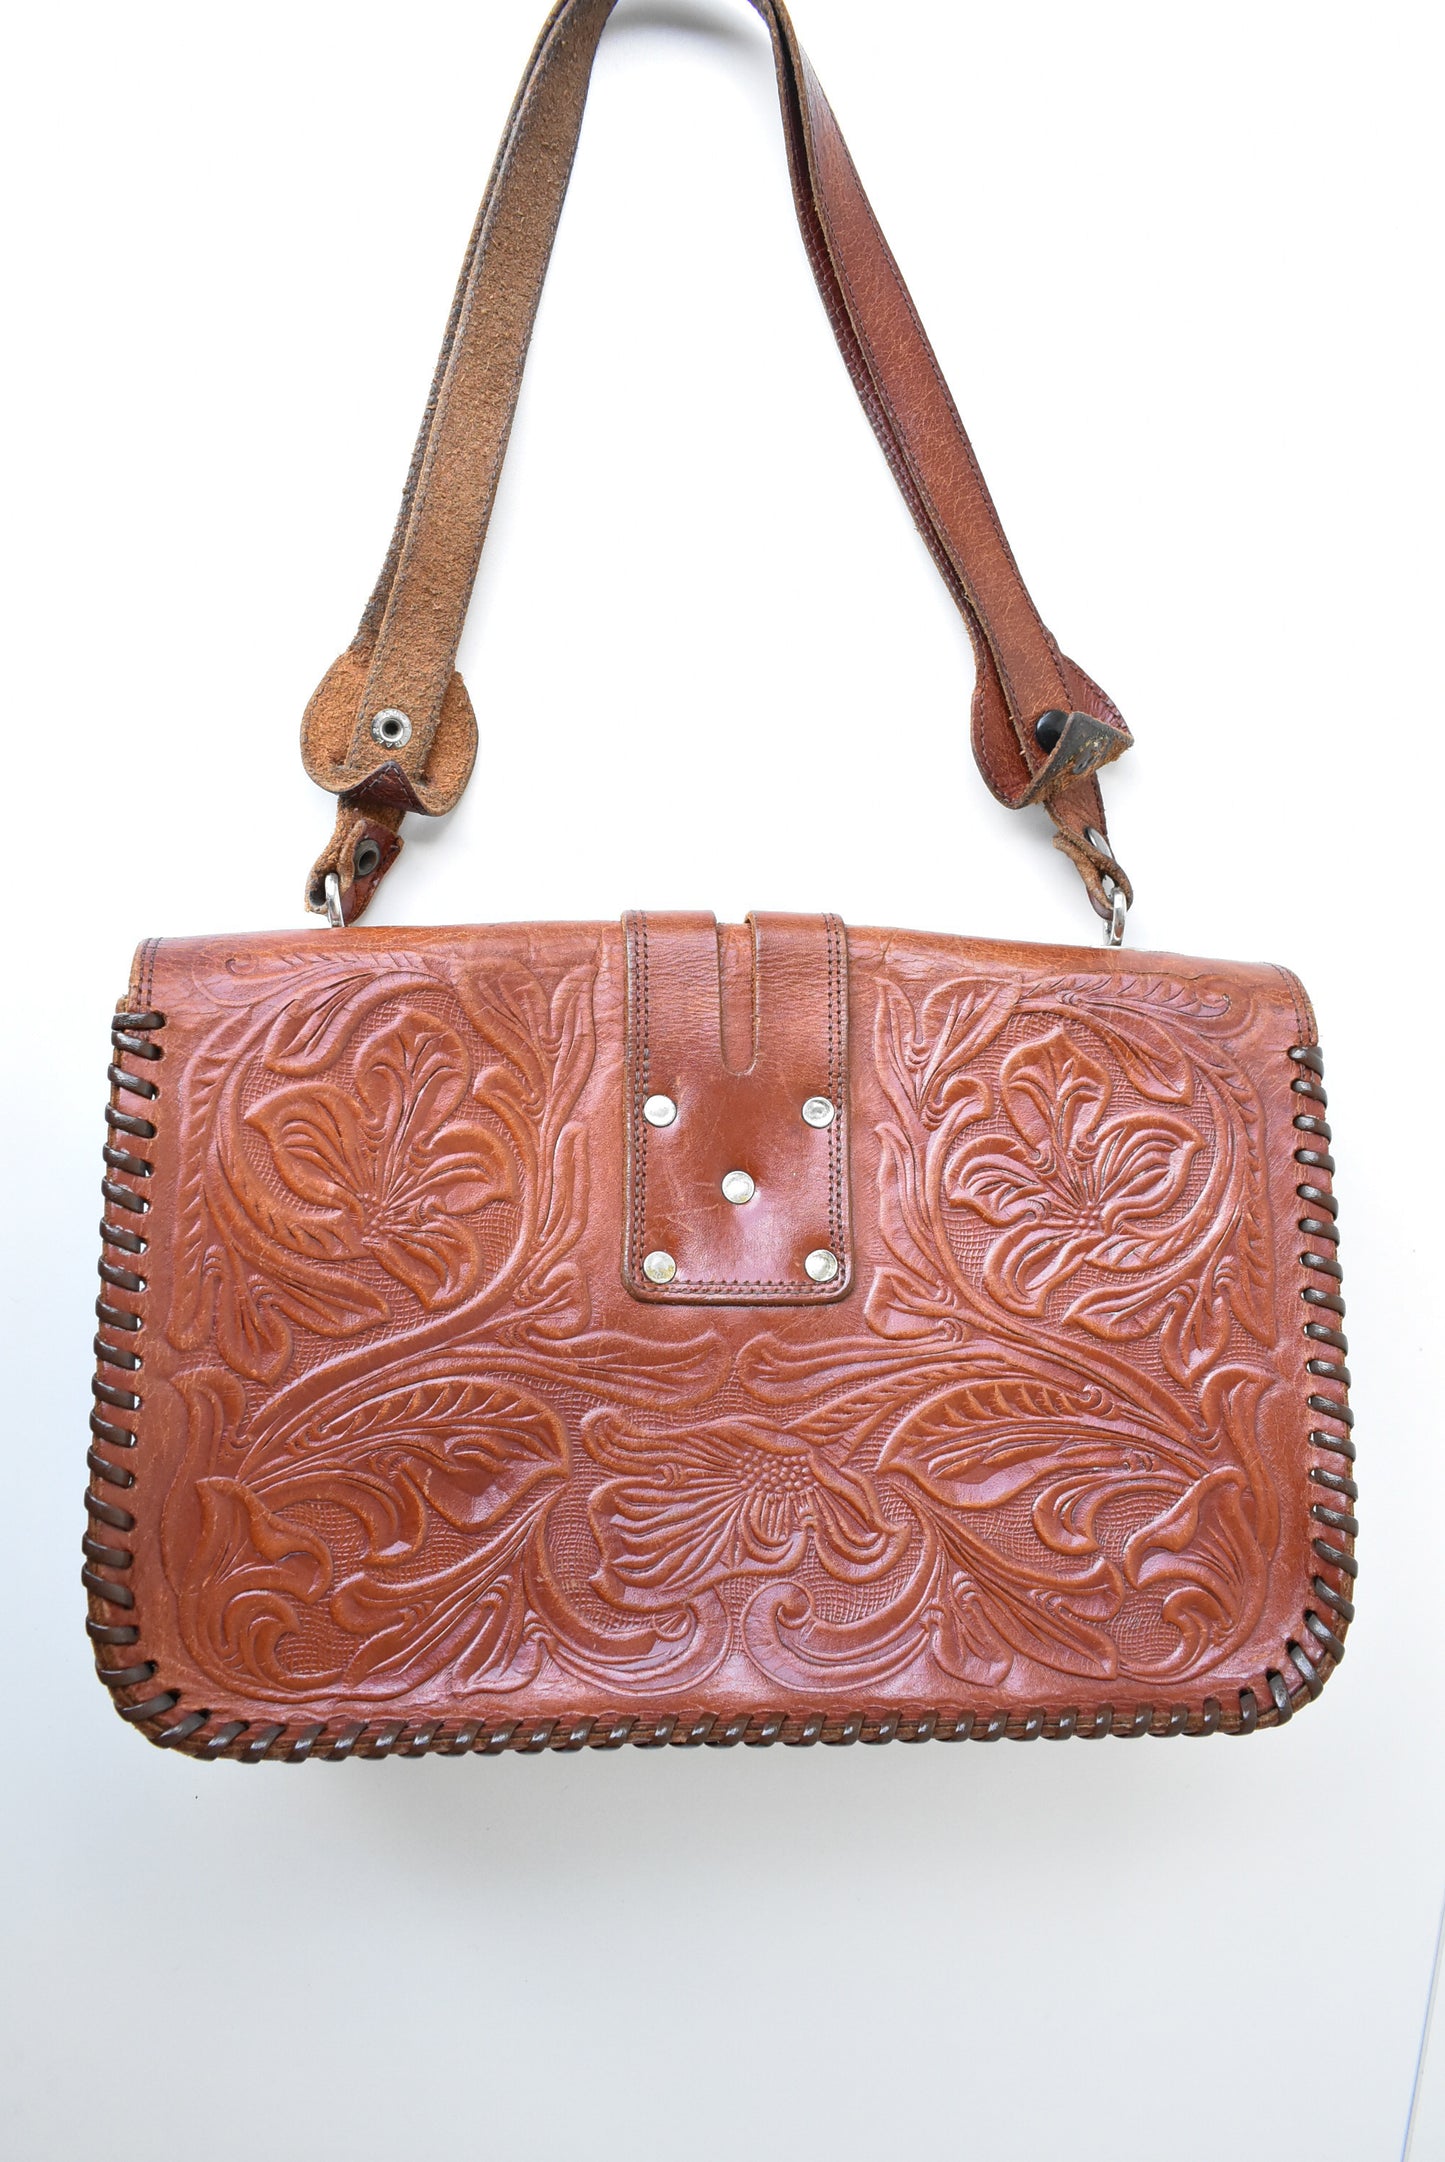 Retro tooled leather satchel style handbag